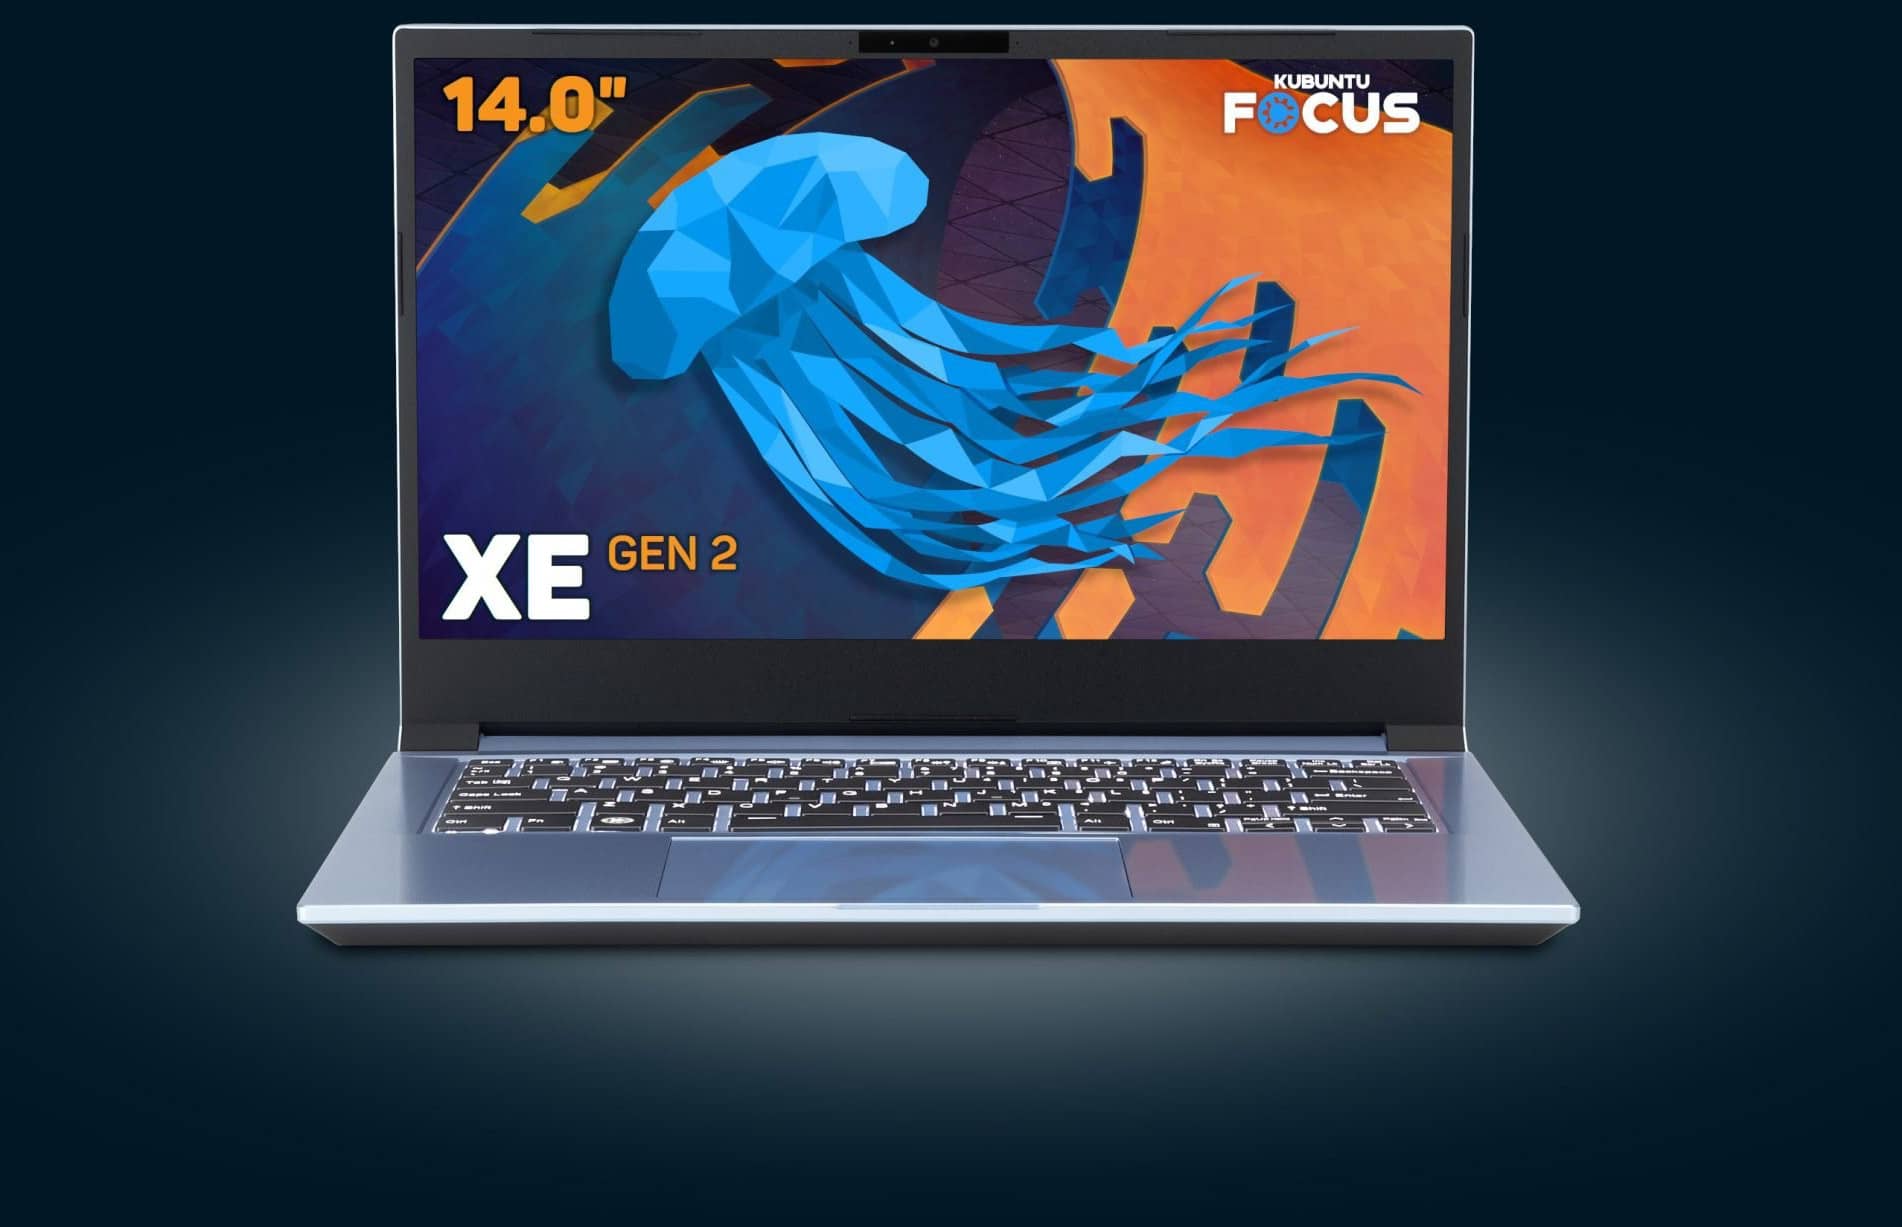 Представлено потужний ноутбук Kubuntu Focus XE Gen 2